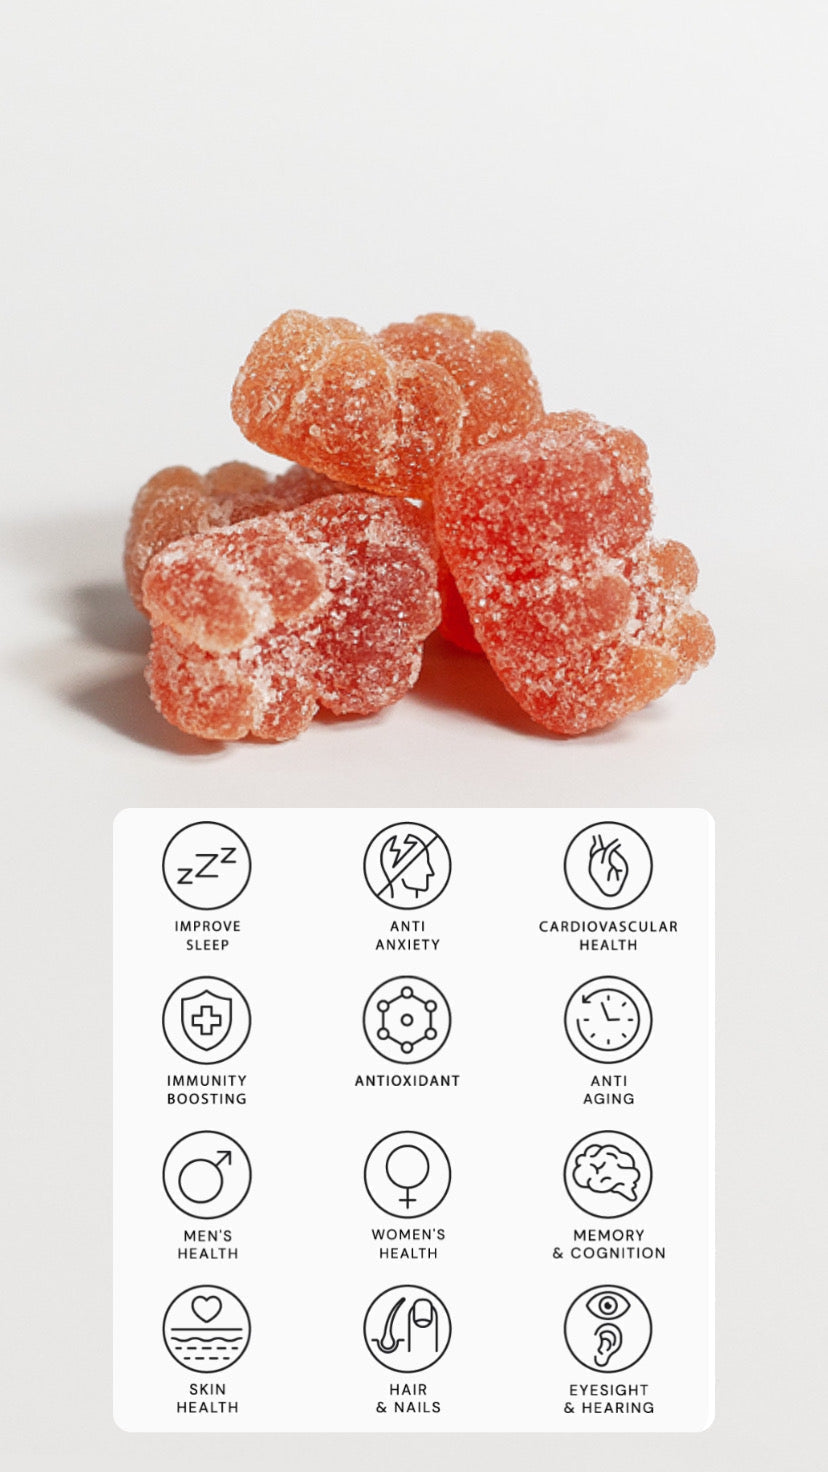 BullyFIT Multi-Vitamin Gummies (Strawberry Flavor)